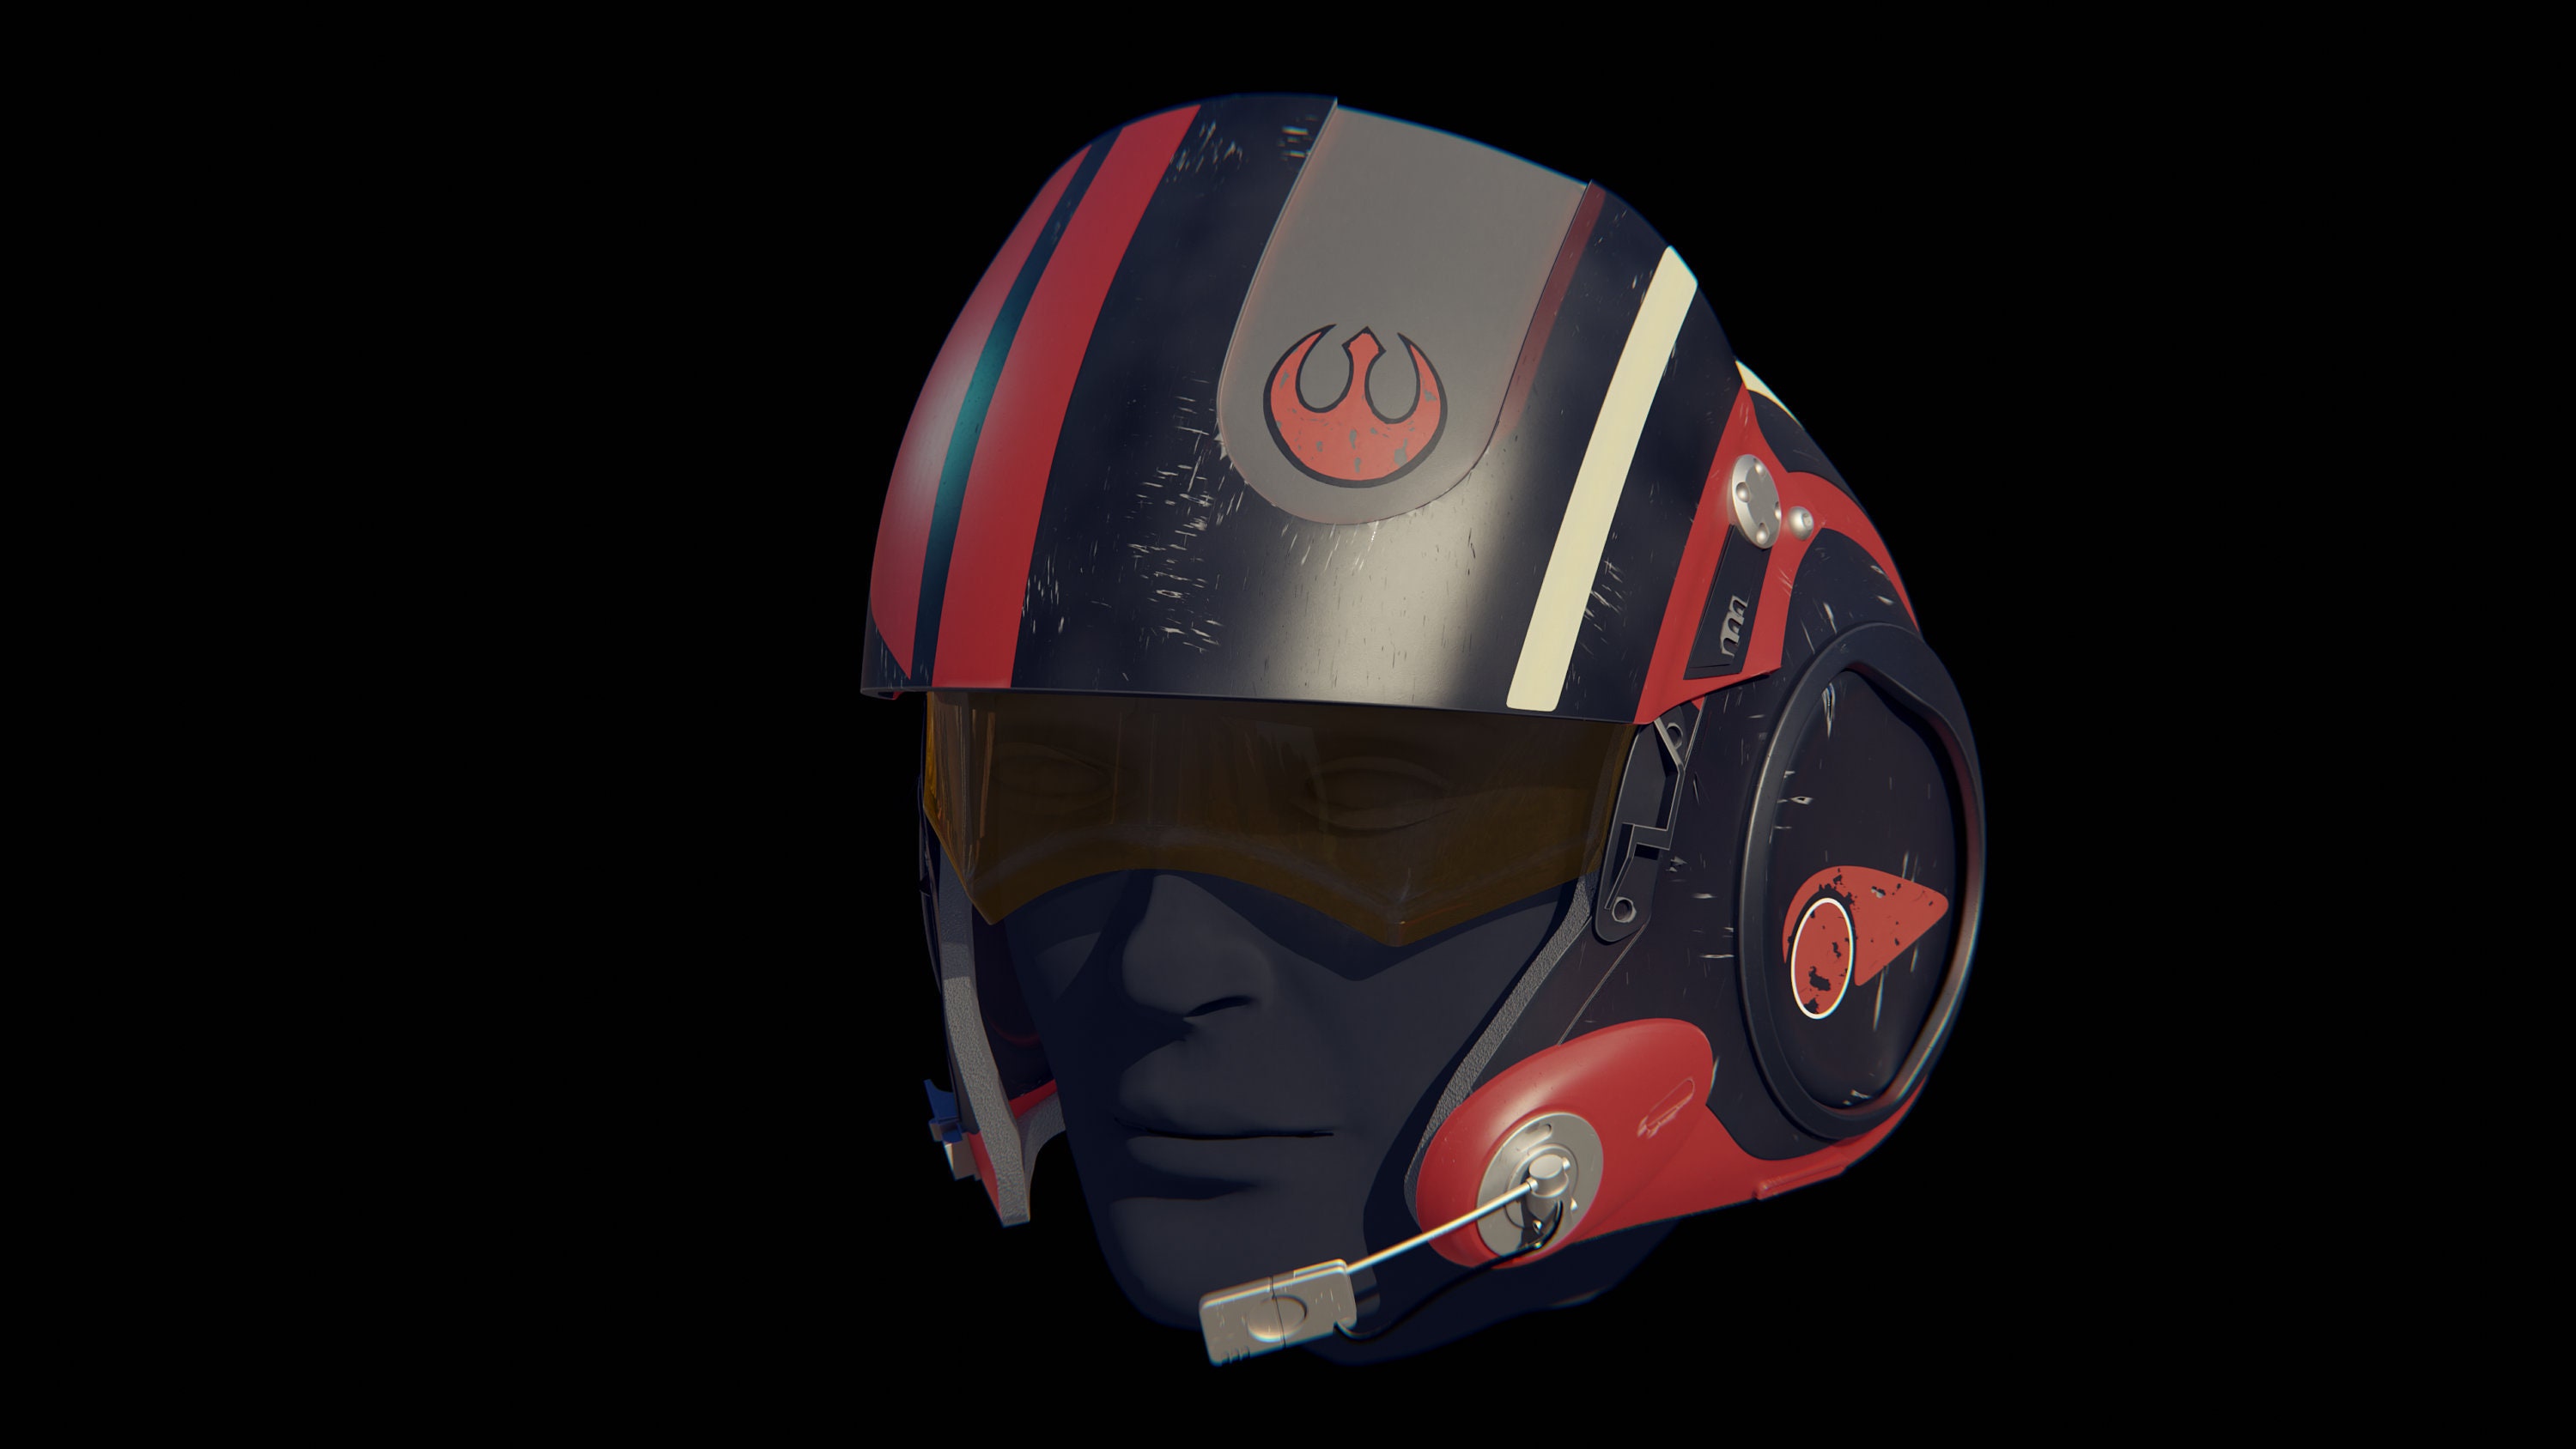 POE Dameron Helmet. POE Dameron Star Wars шлем. По Дэмерон в шлеме. Helmet Pilot x-Wing Star Wars.